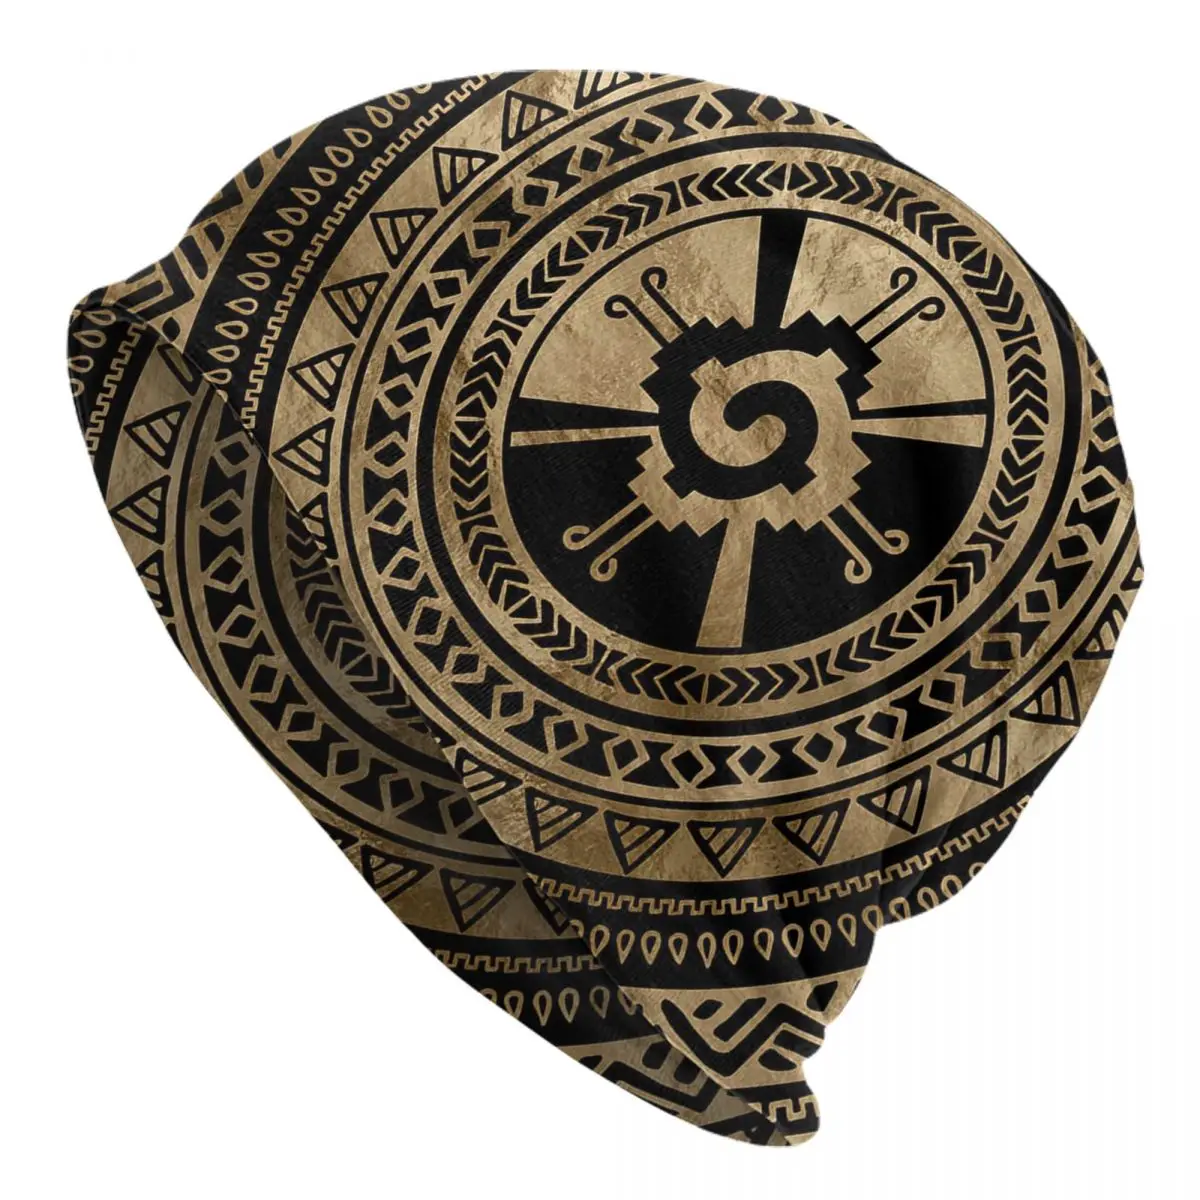 Hunab Ku Mayan Symbol Black And Gold Adult Men's Women's Knit Hat Keep warm winter knitted hat